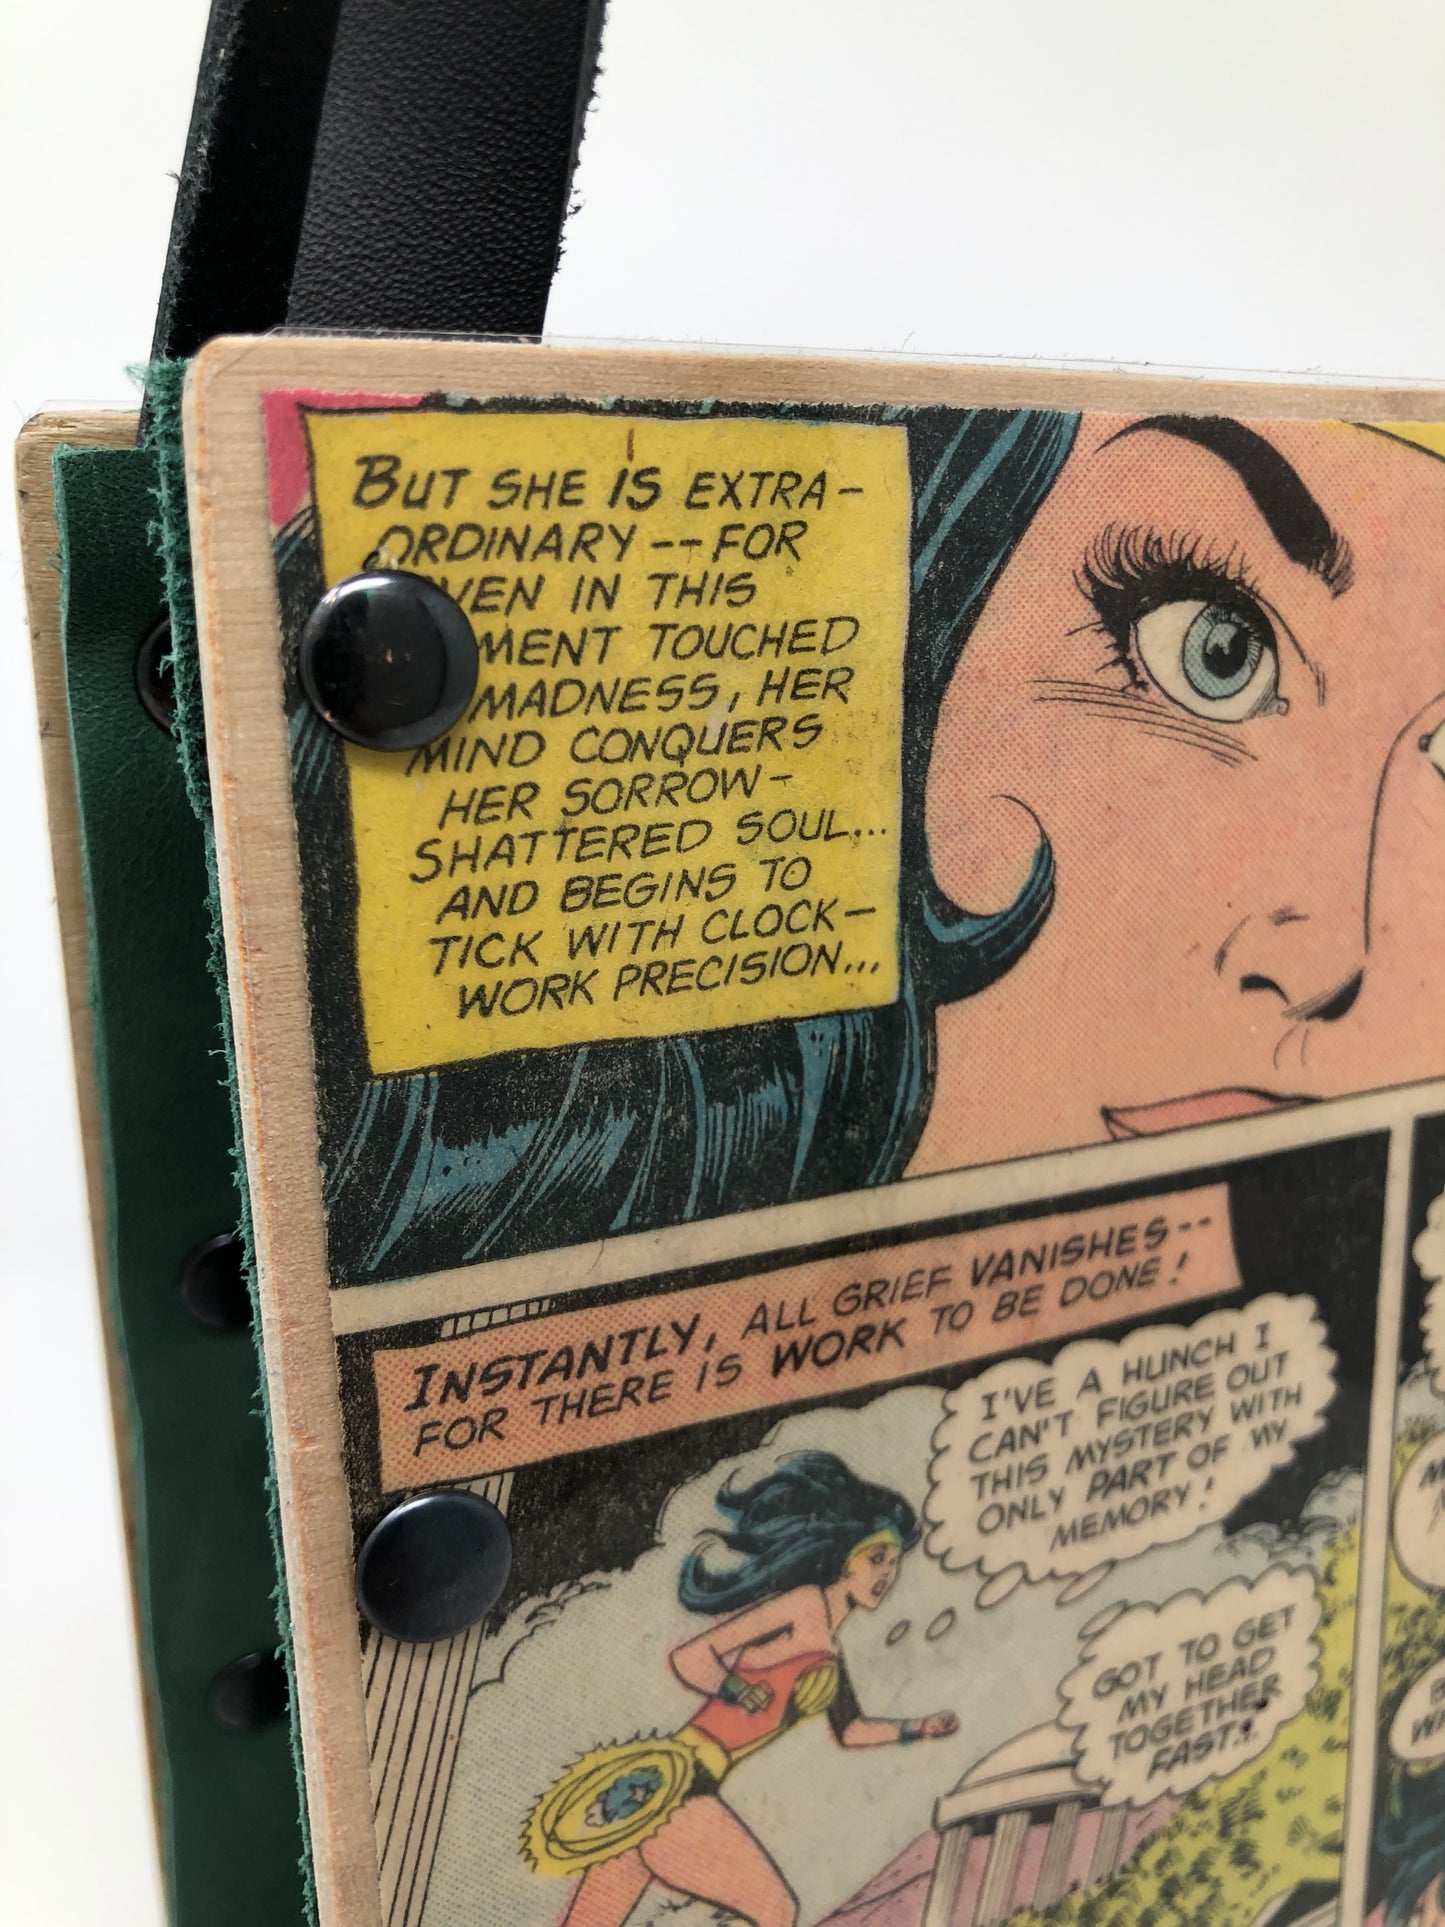 Vintage Wonder Woman Handbag - Suffering Sappho!